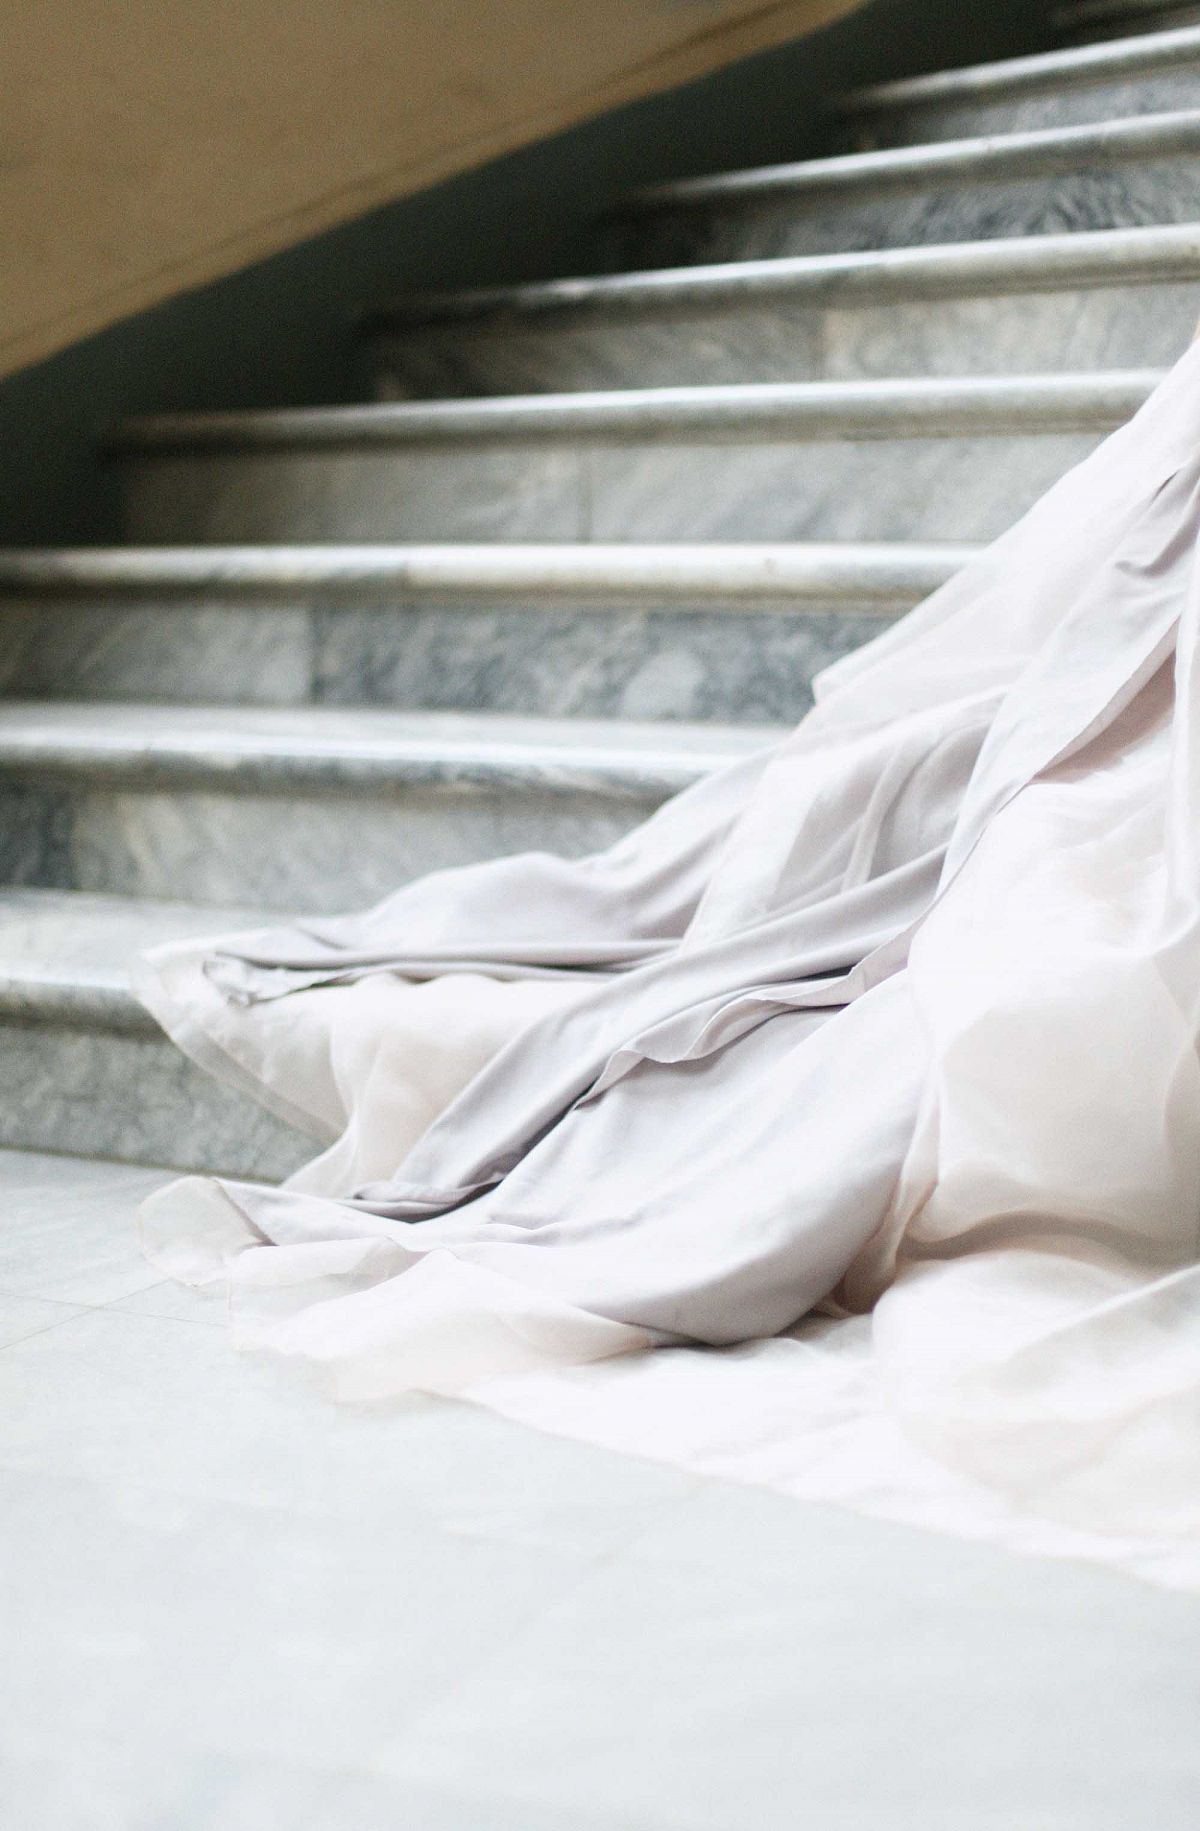 Graceful Movement Captured on Film - Ballerina Bride